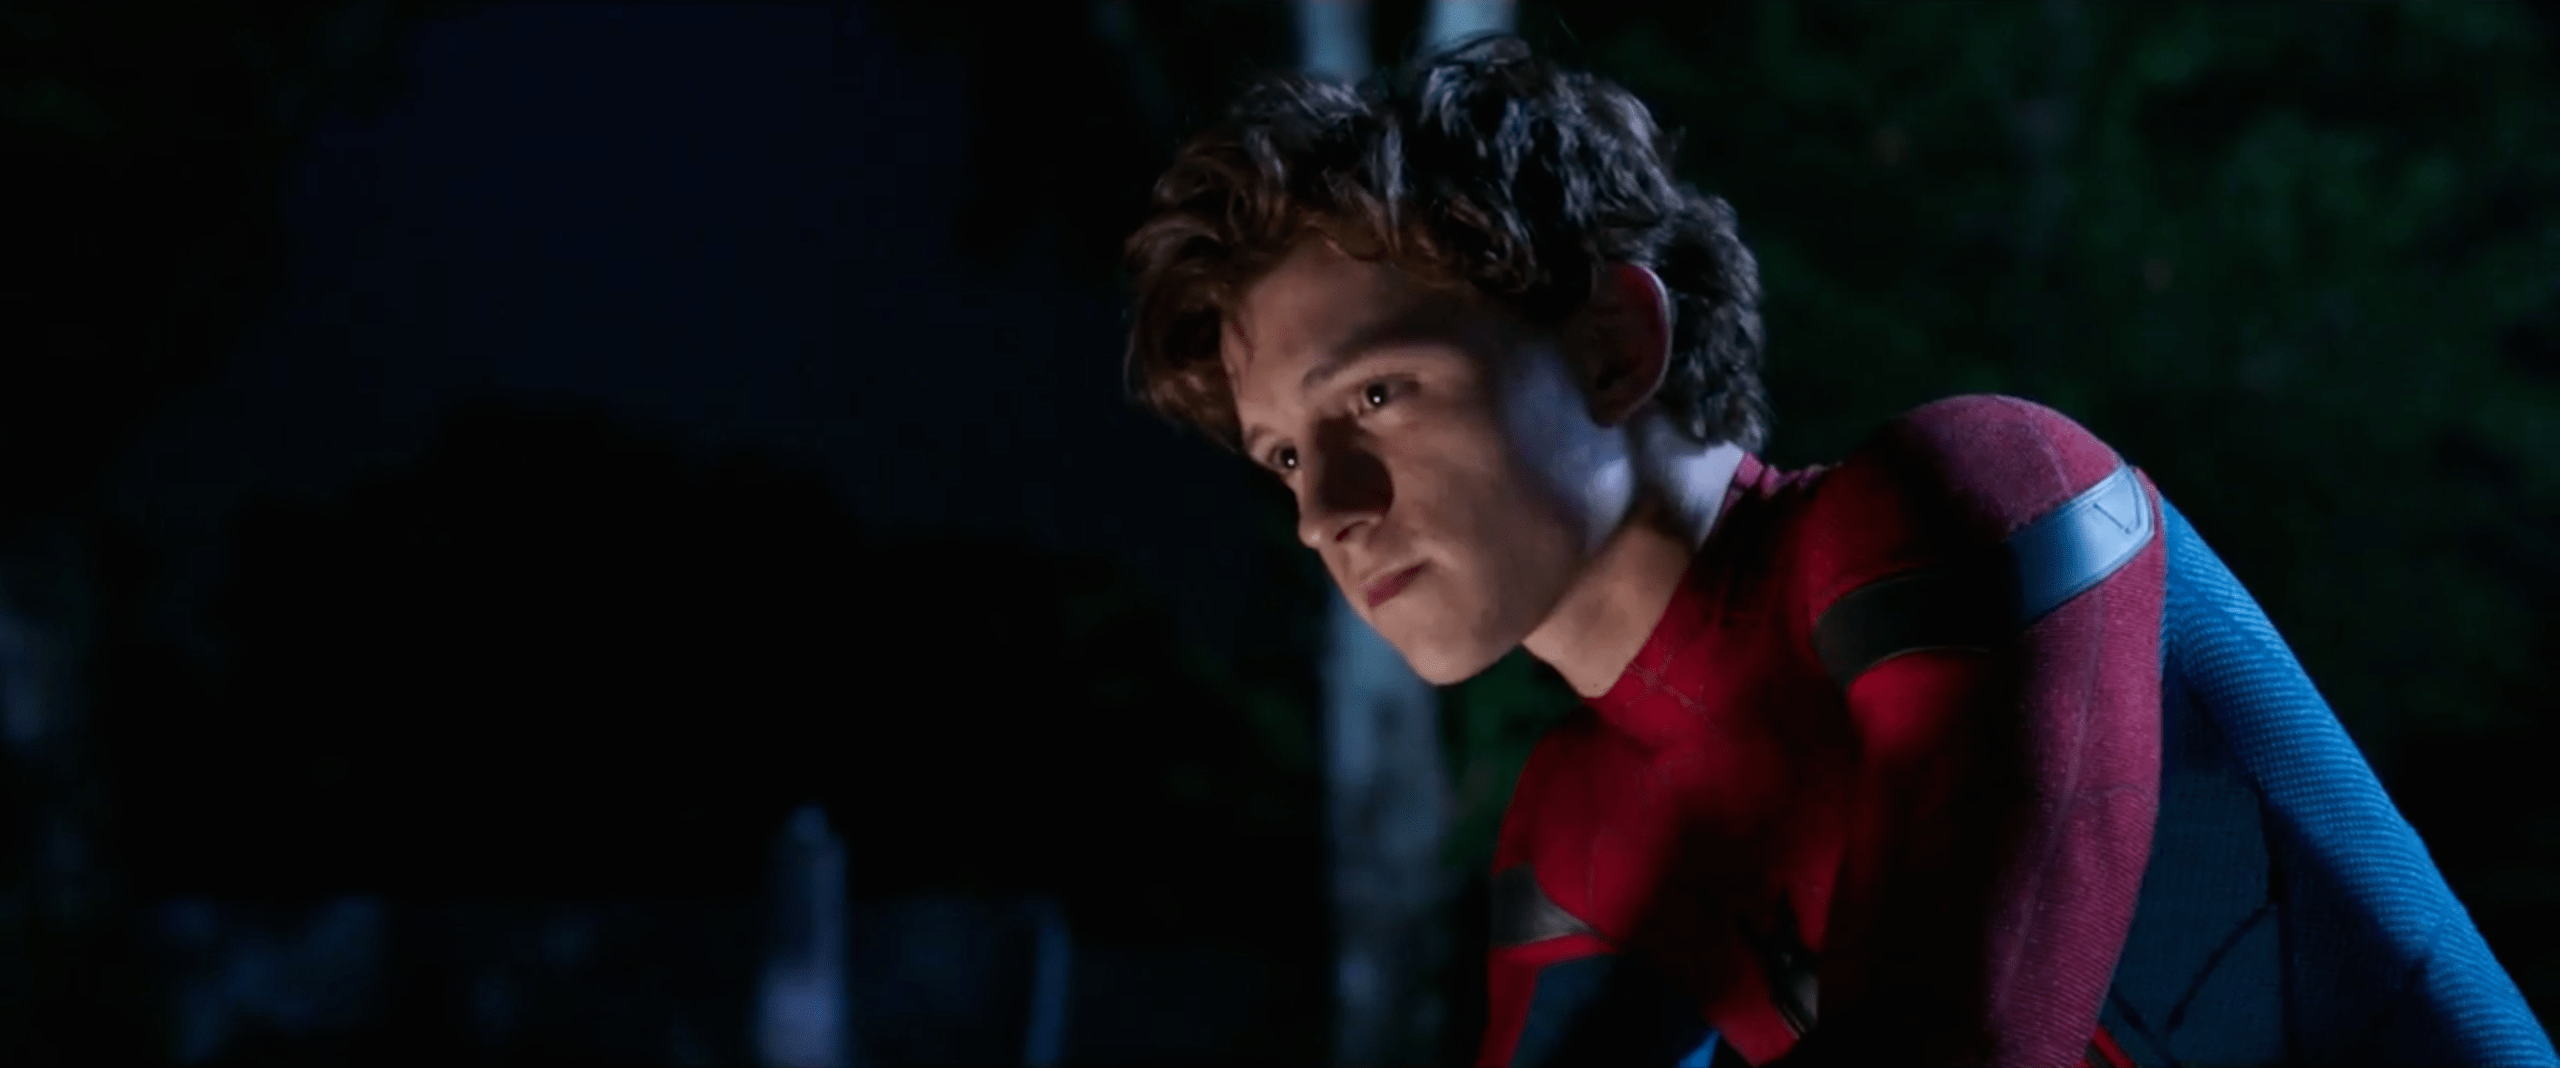 Spider-man: Homecoming, un reboot in versione teen che funziona